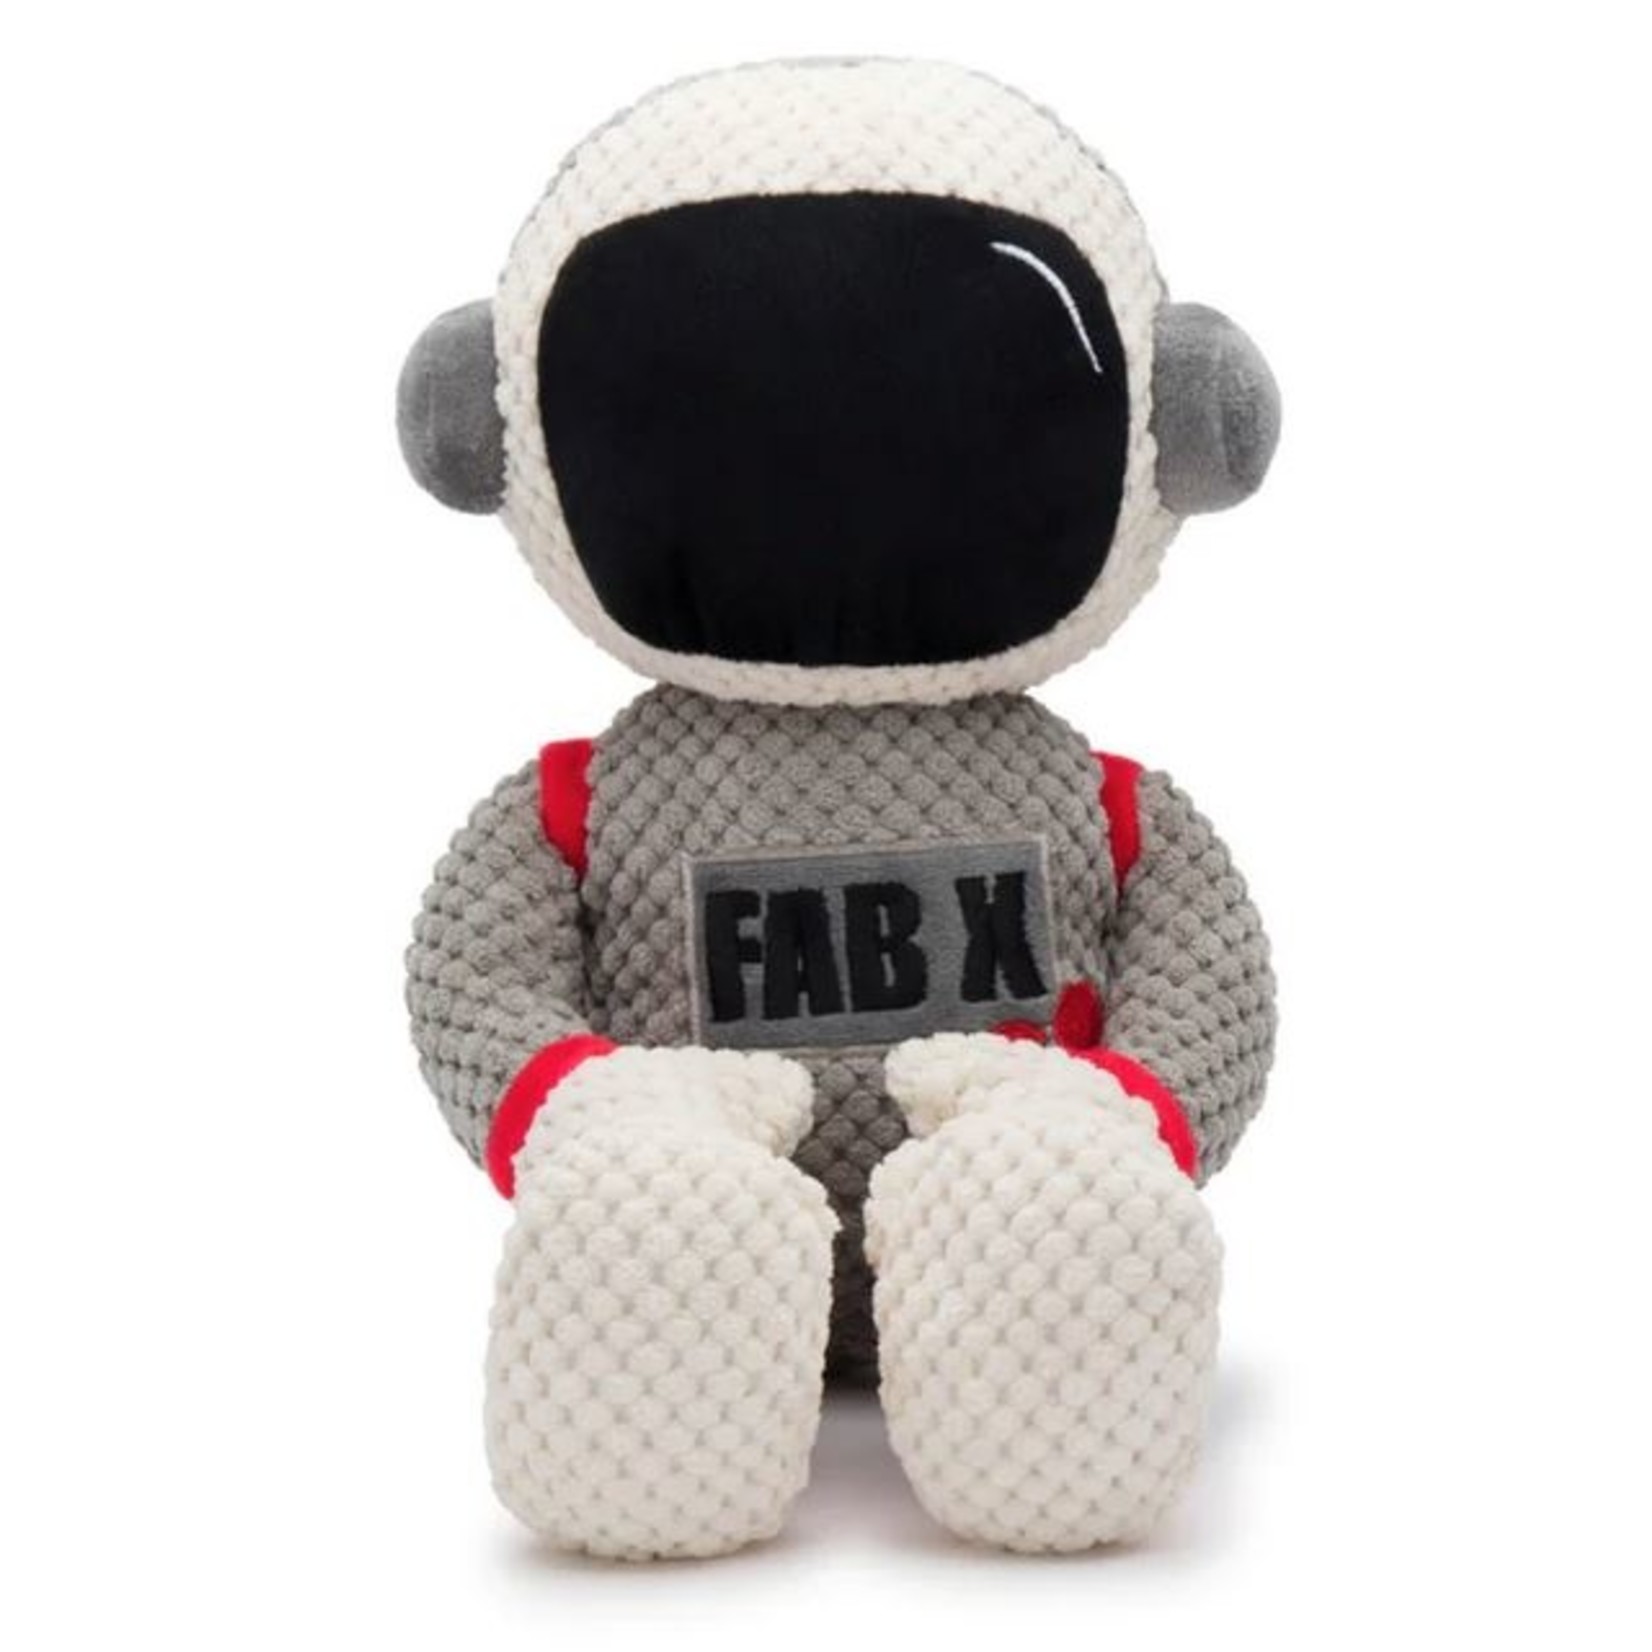 Fabdog FABDOG Floppy Astronaut LG Dog Toy